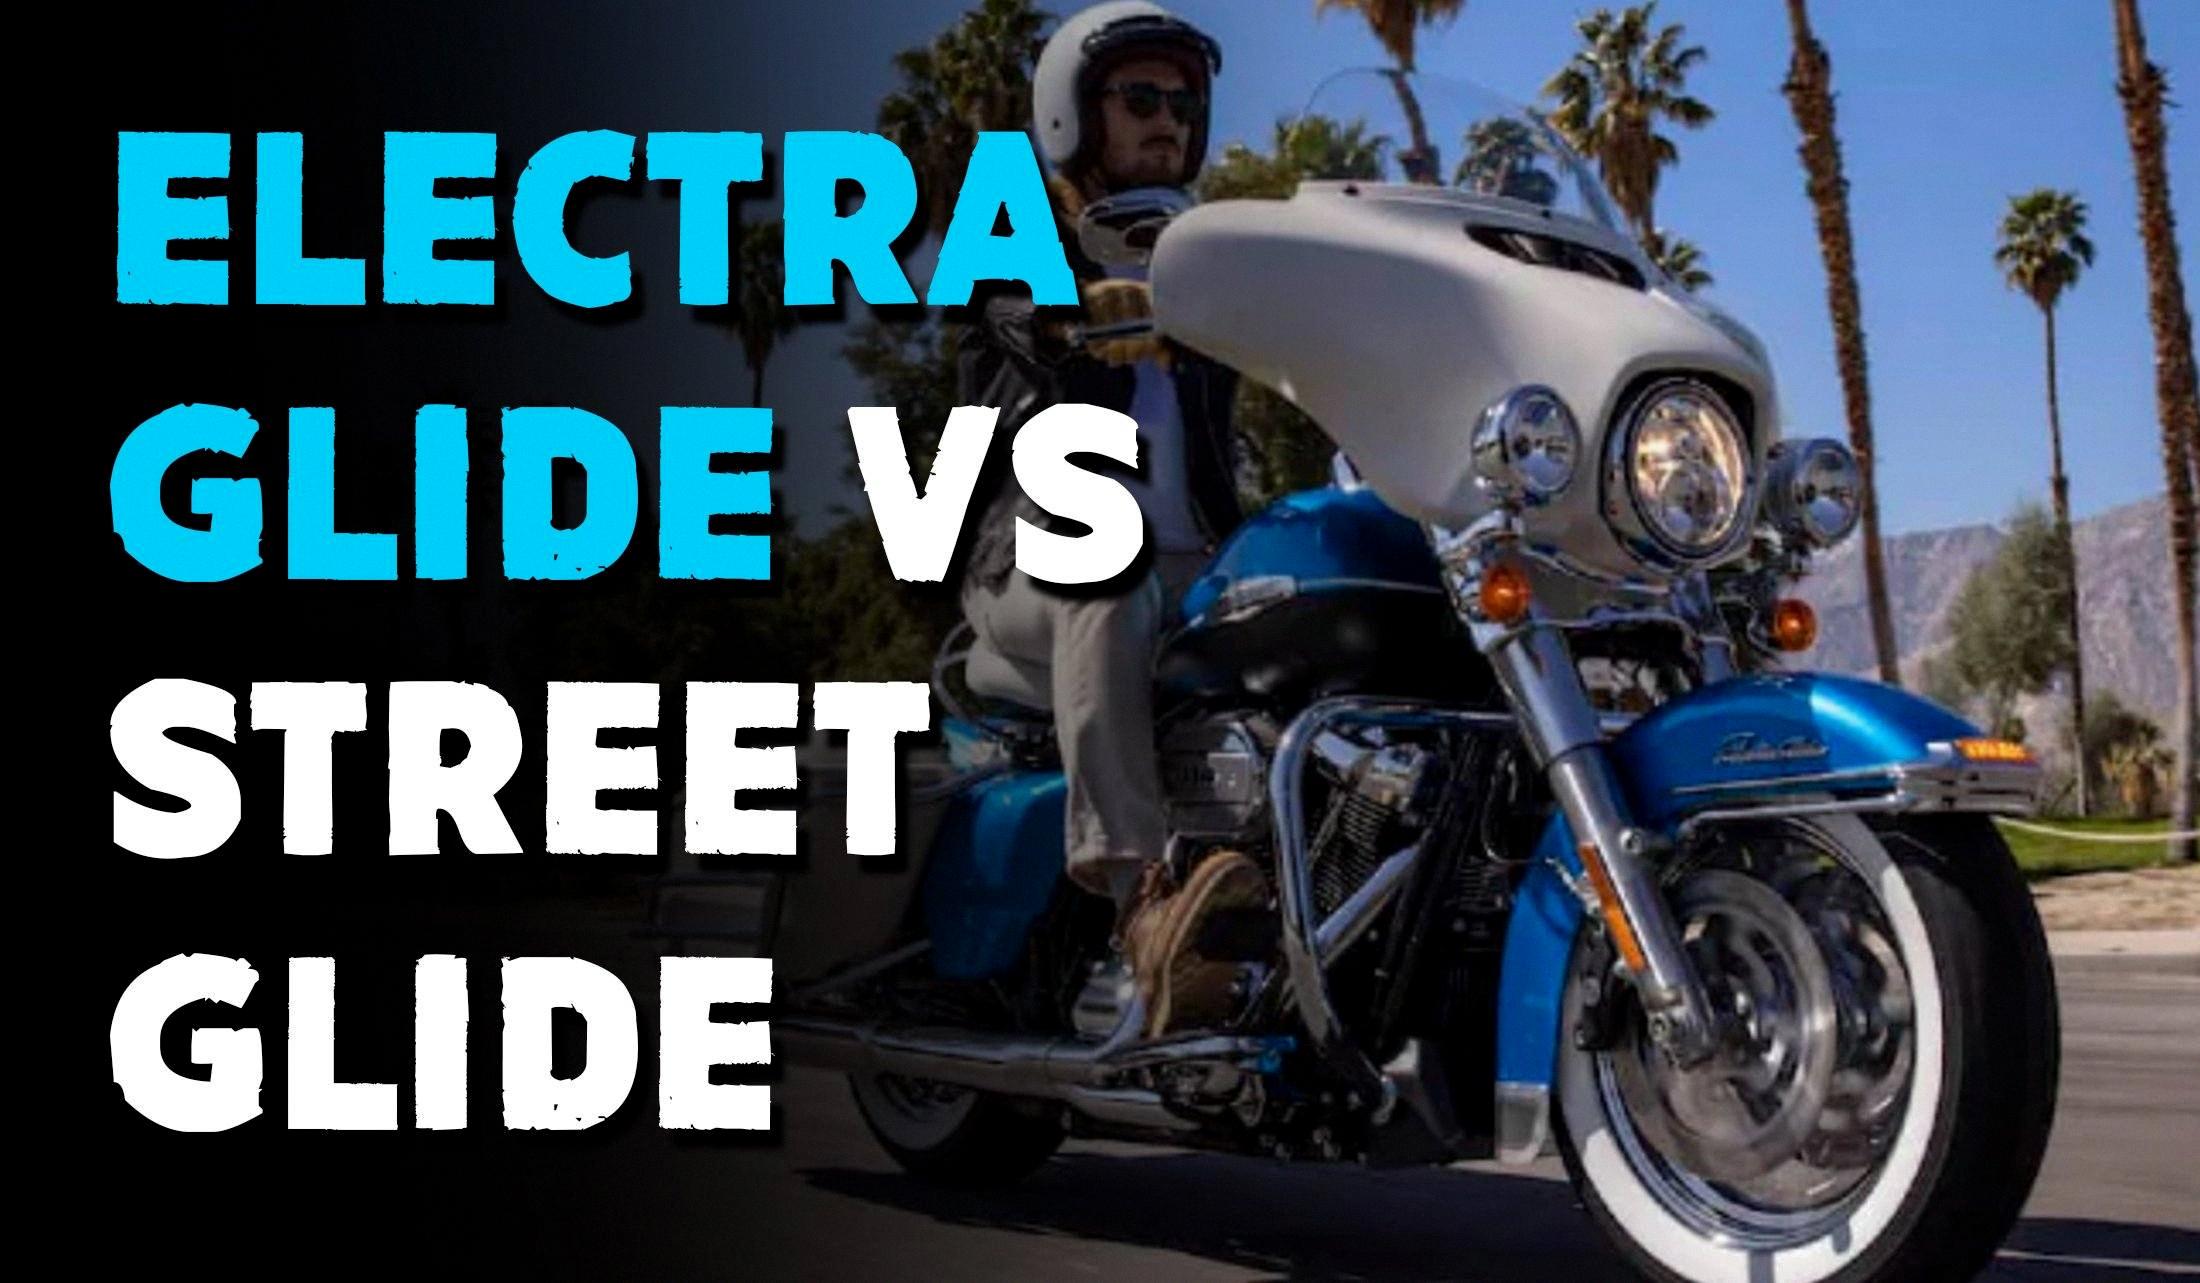 electra glide vs street glide